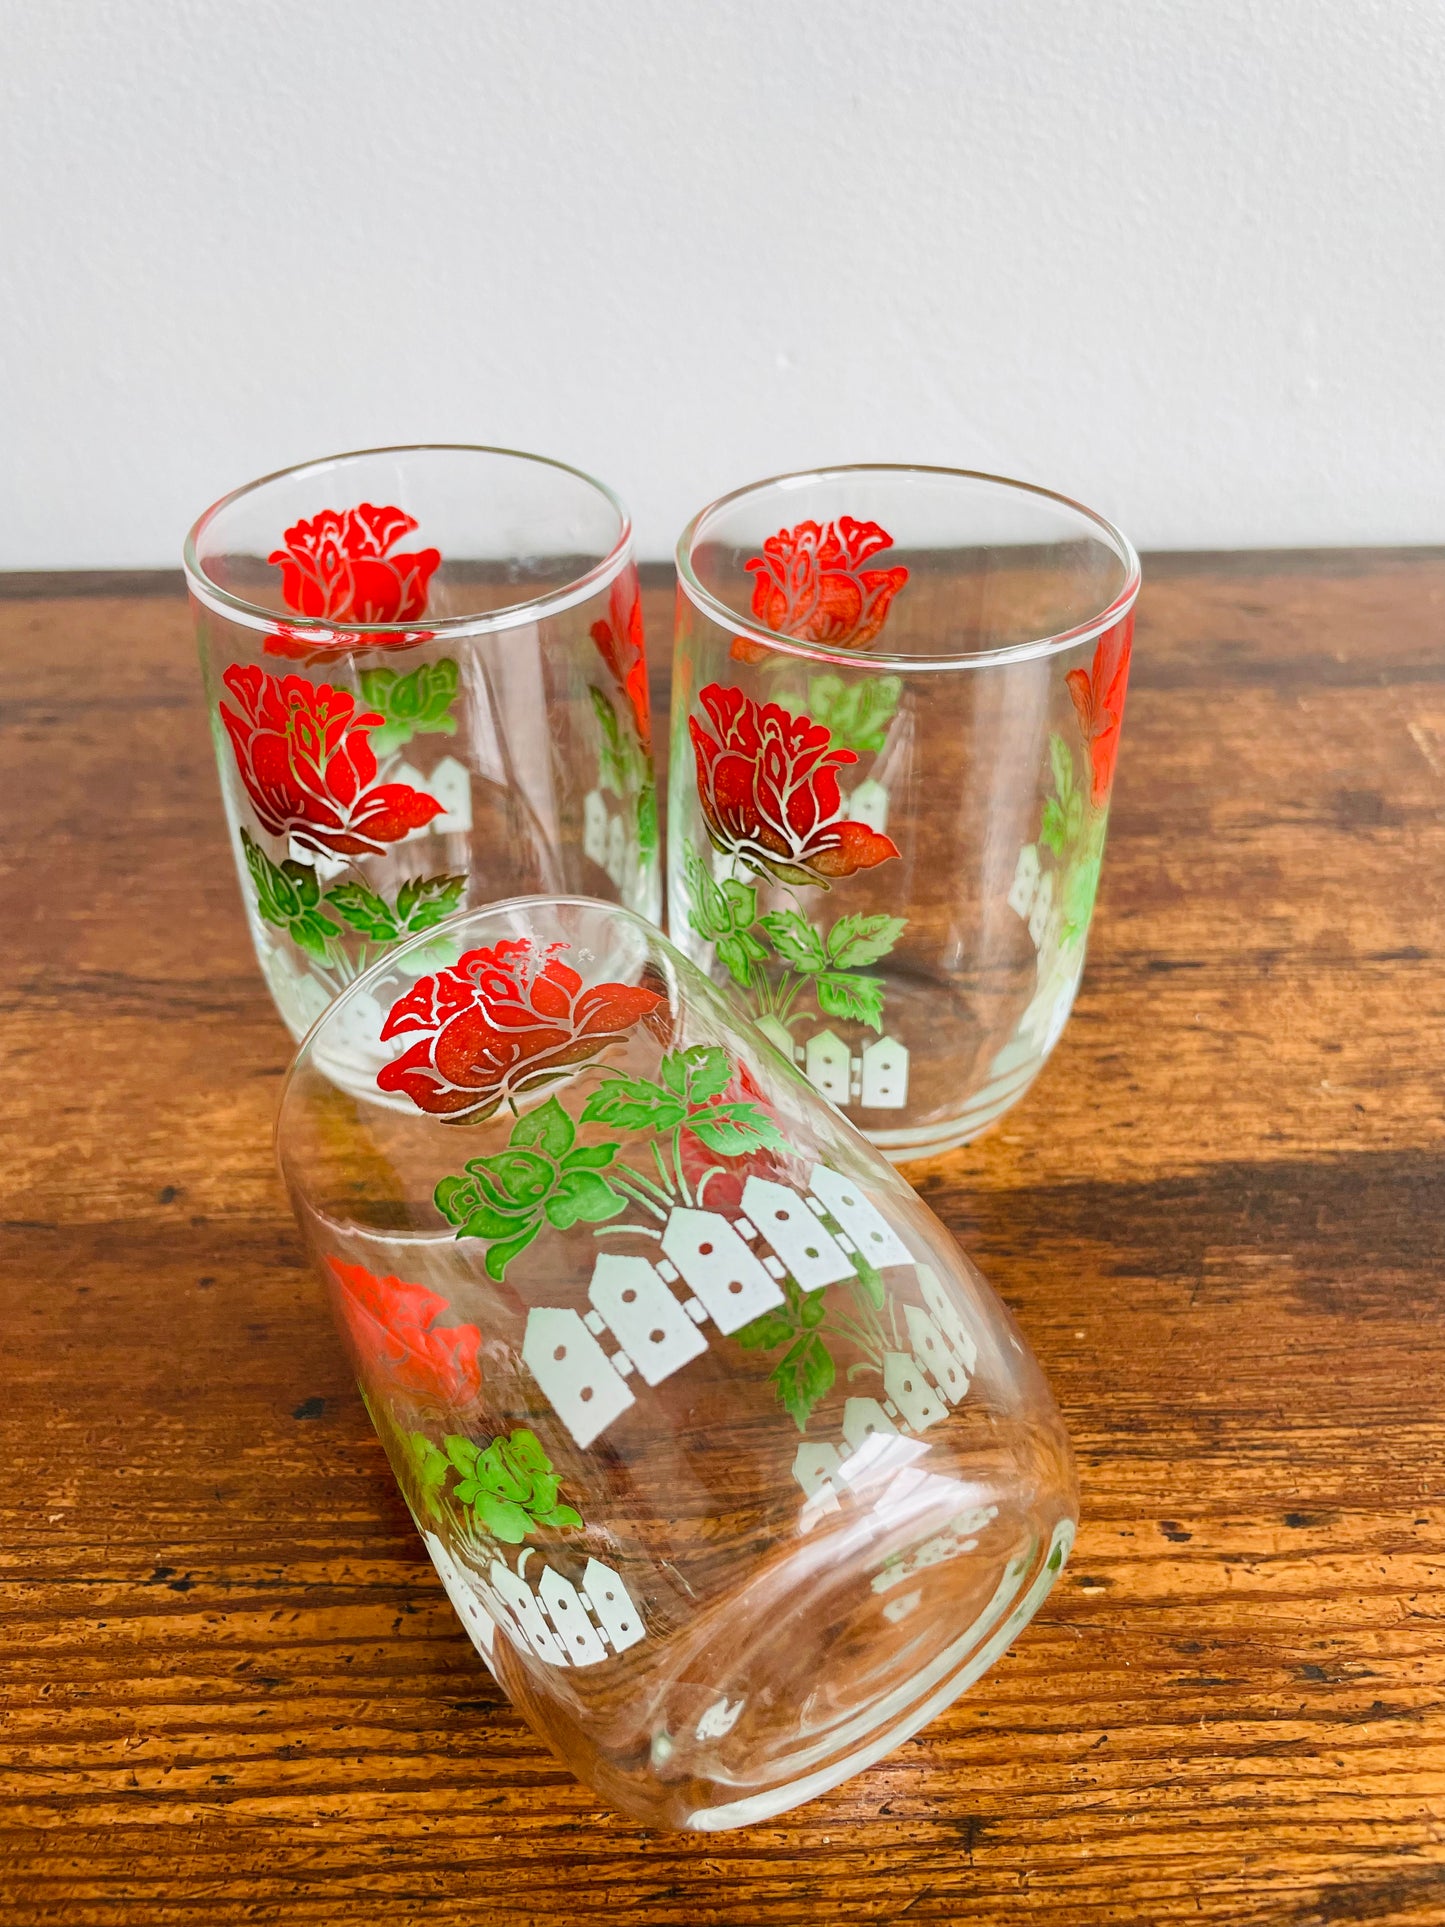 Juice Glasses with Rose Garden & White Picket Fence Design - Set of 3